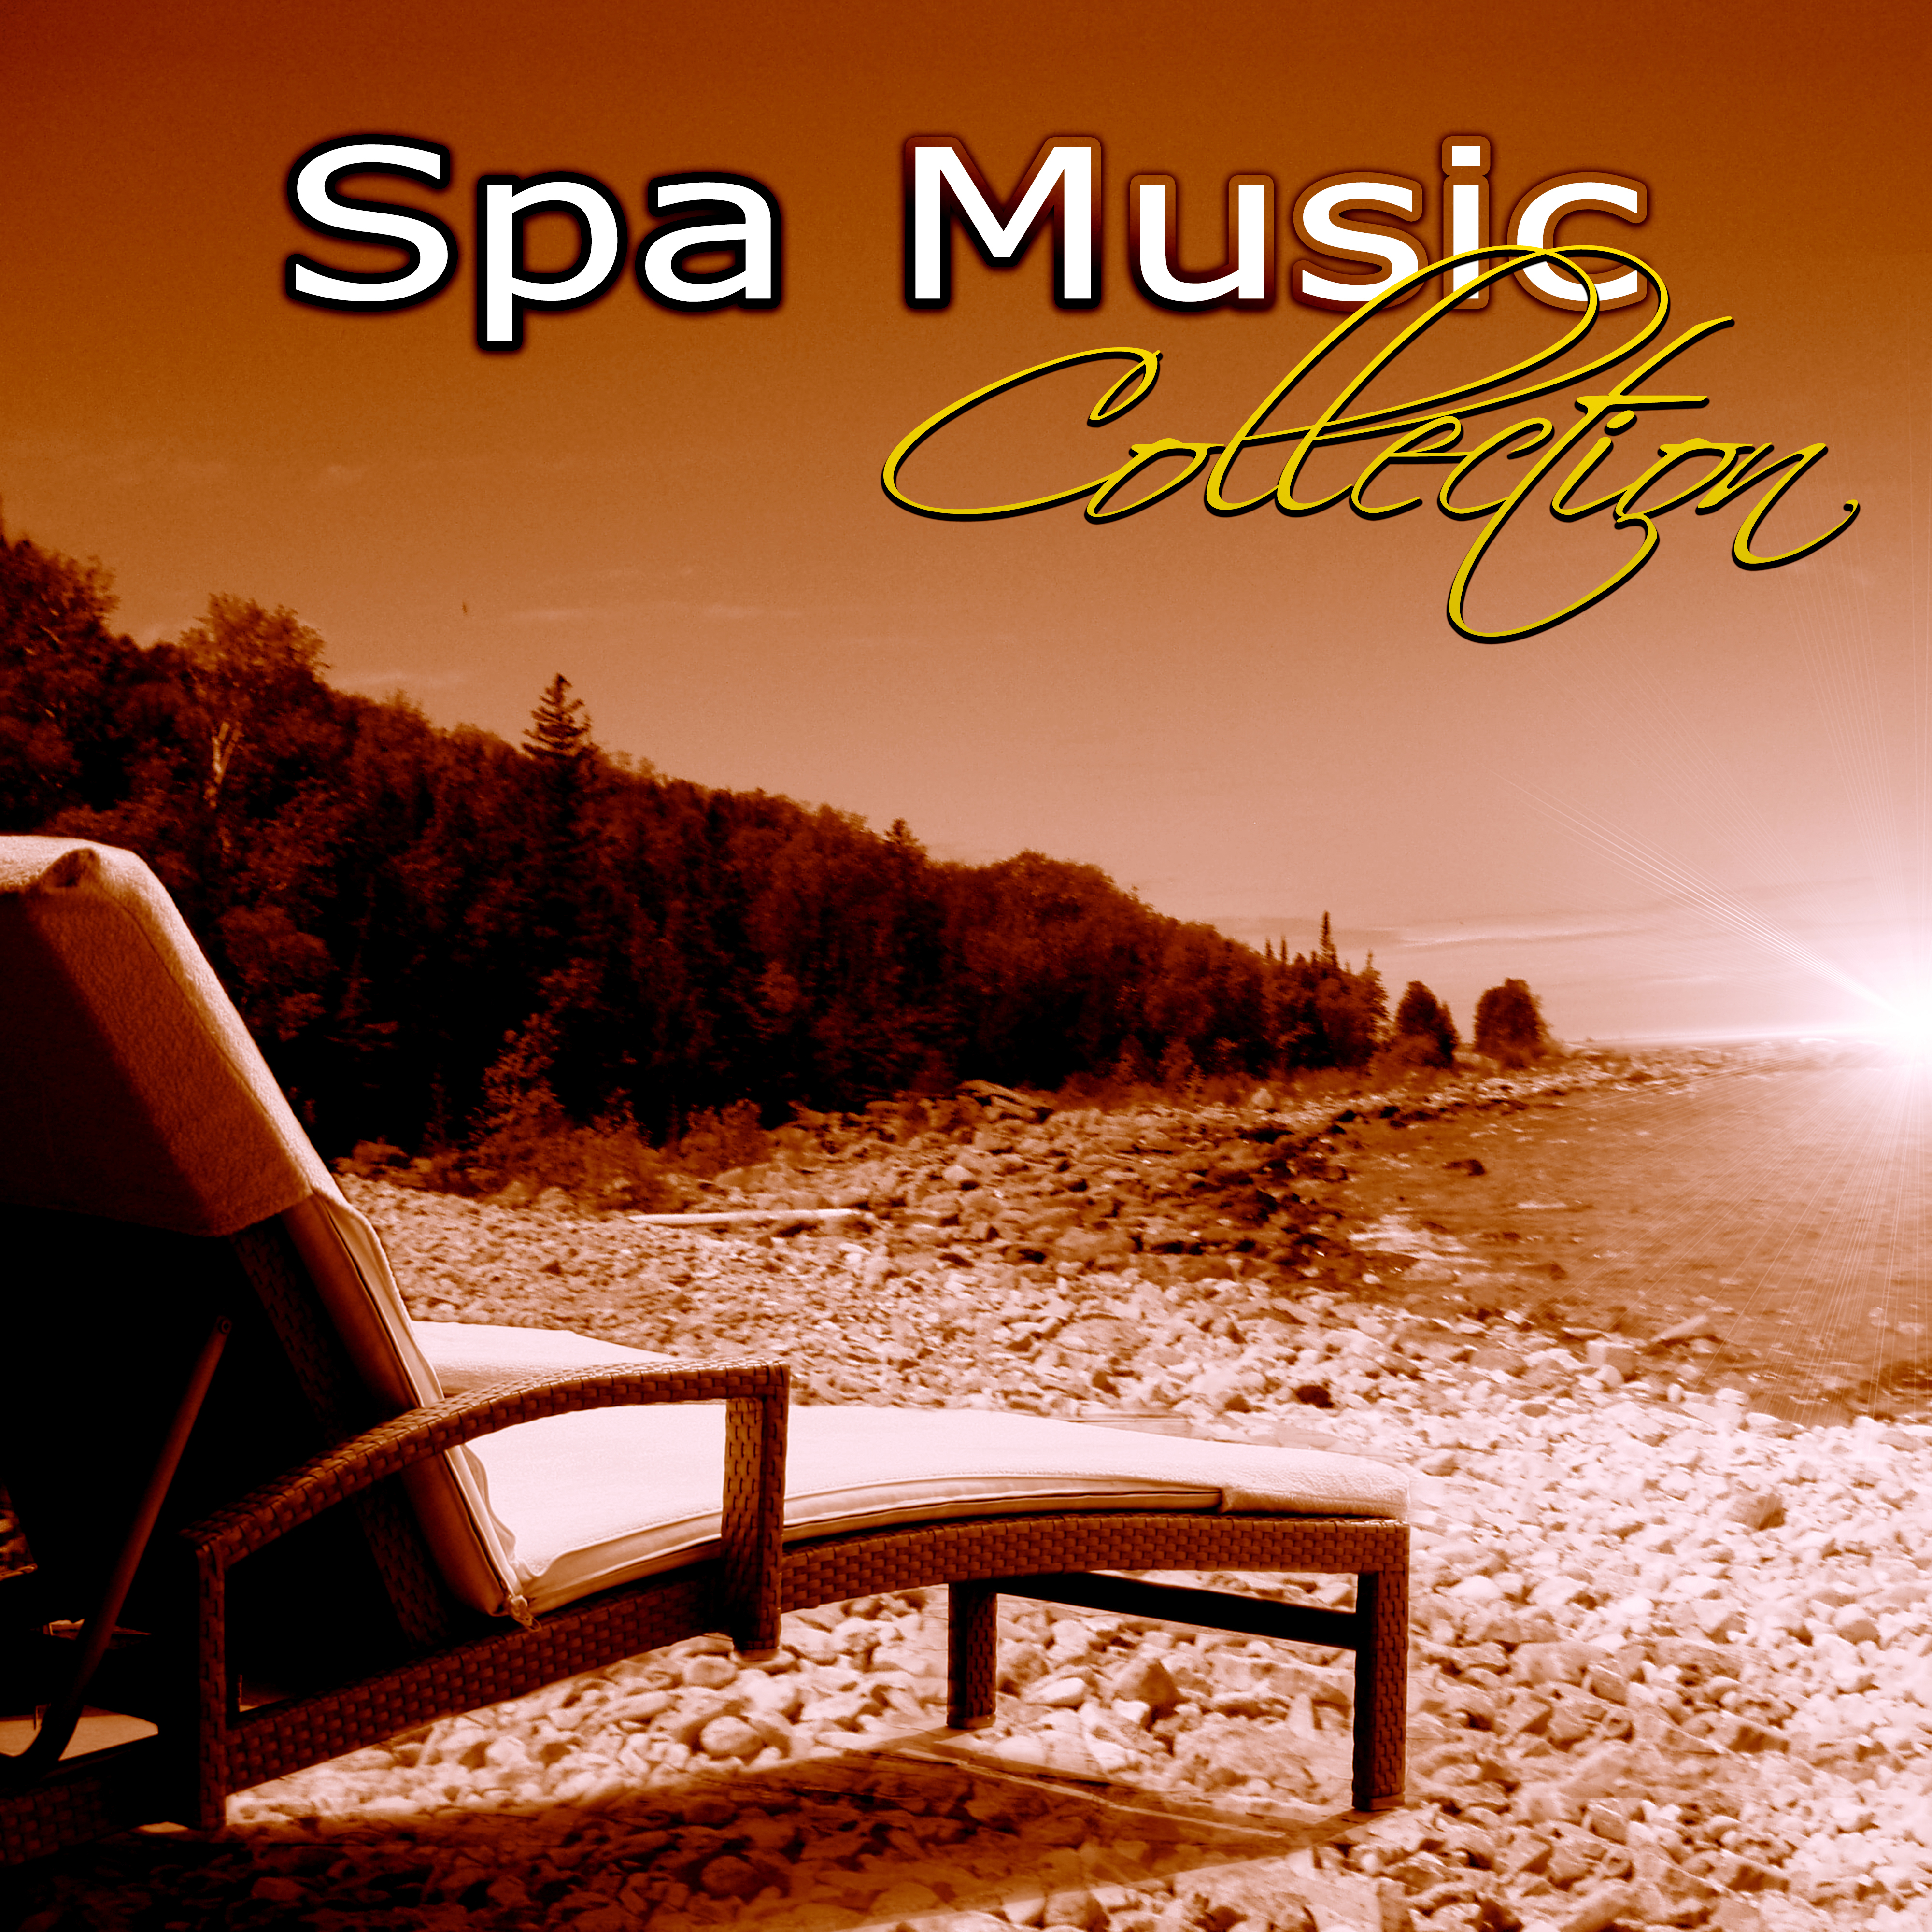 Spa Salon Relaxation